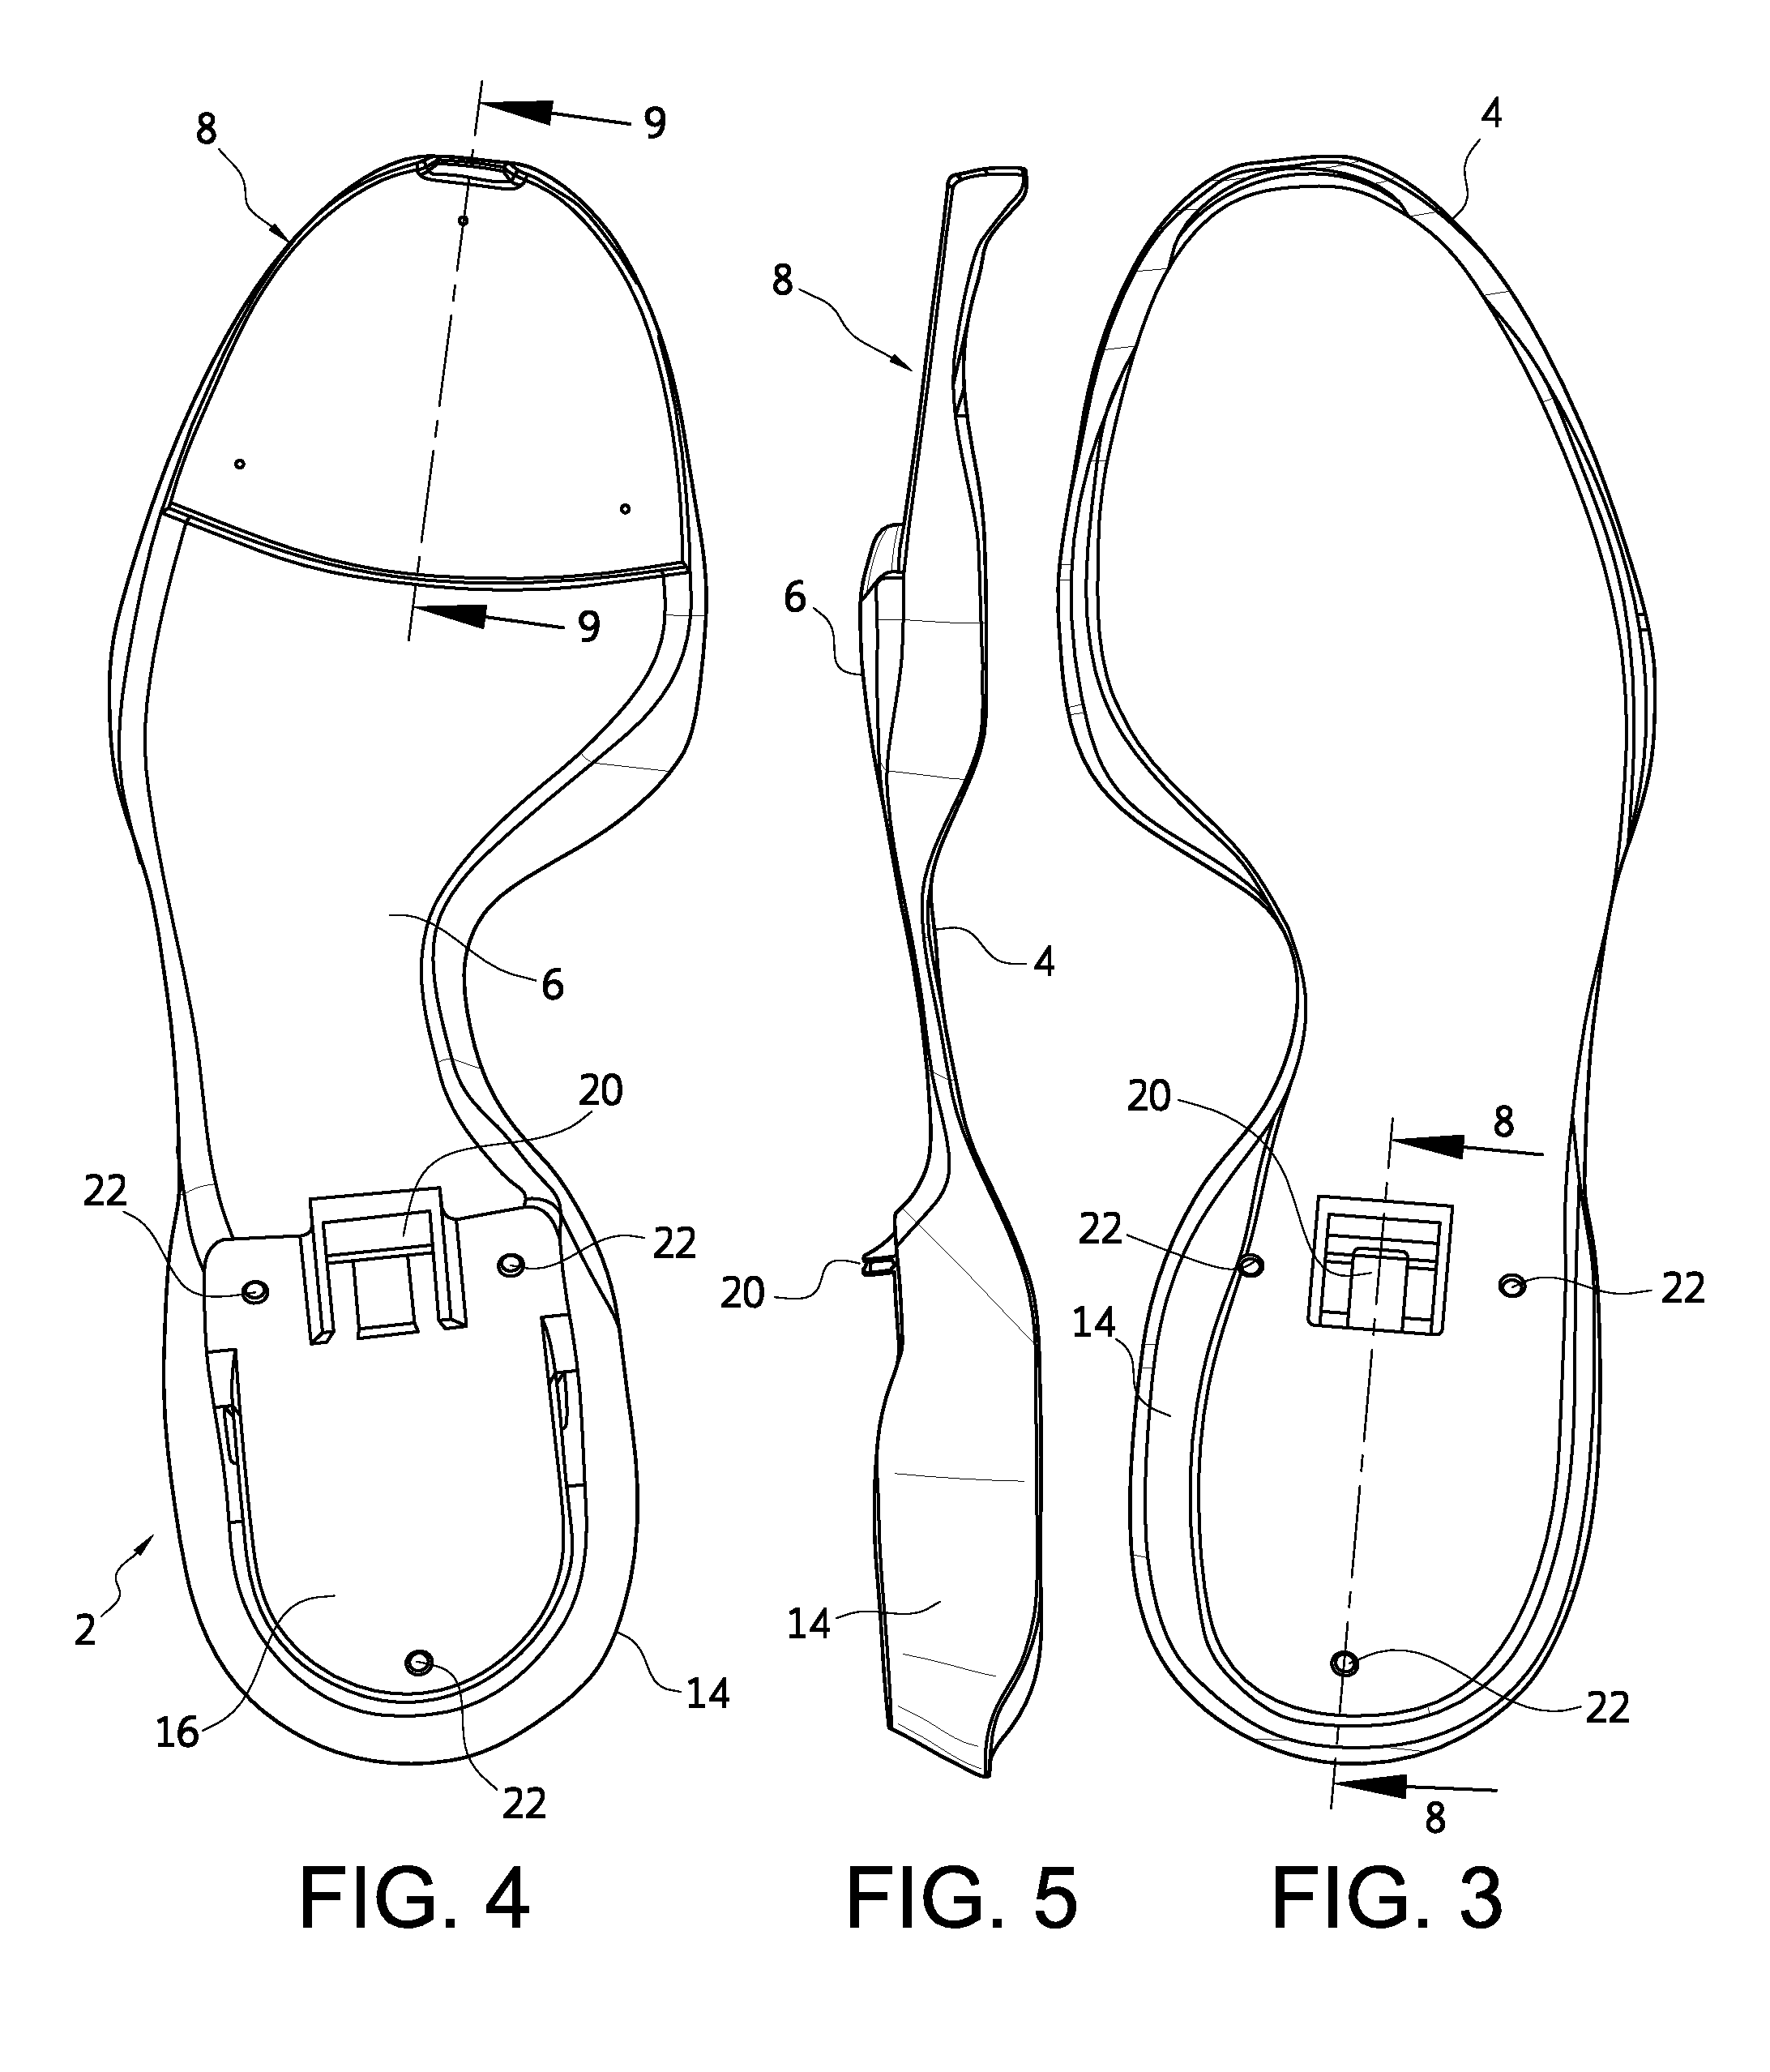 Shoe sole and interchangeable heel